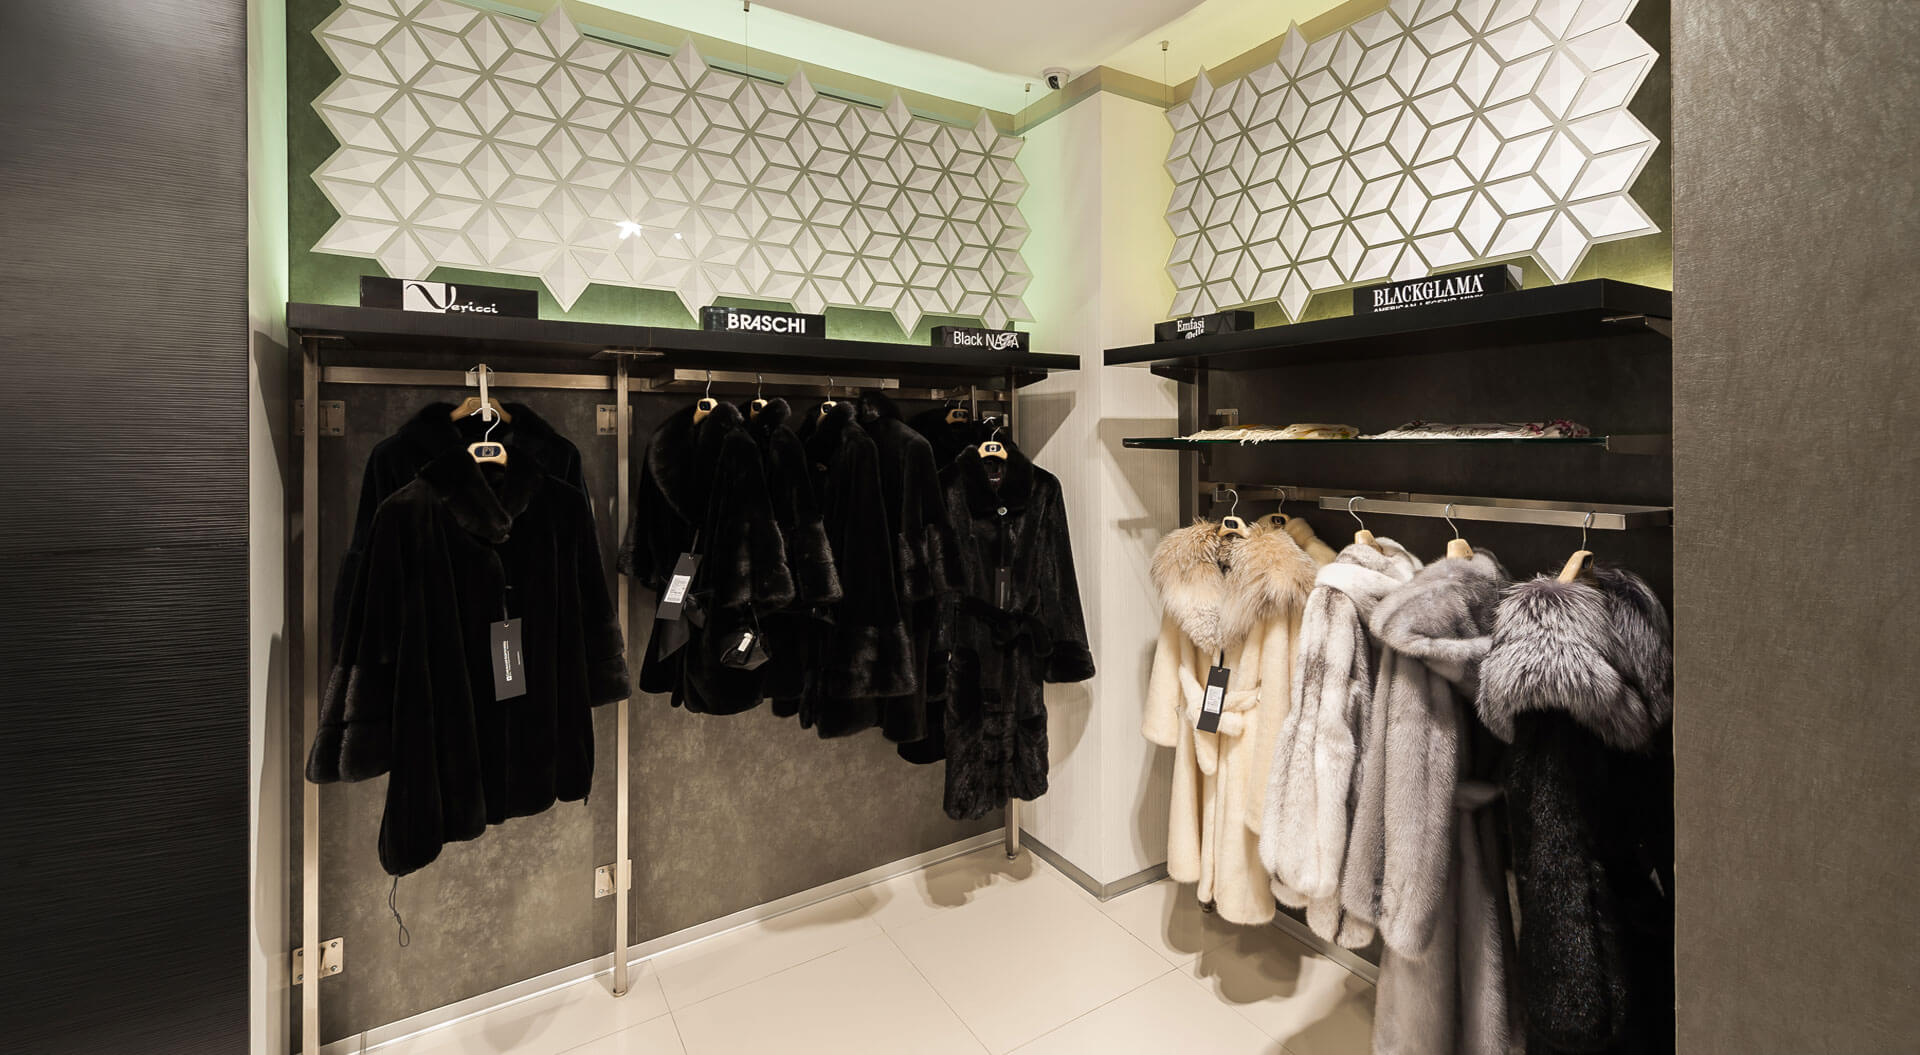 Snow Queen, Снежная королева,  Russia fashion store retail interior design, merchandising and rebrand graphics for furs department